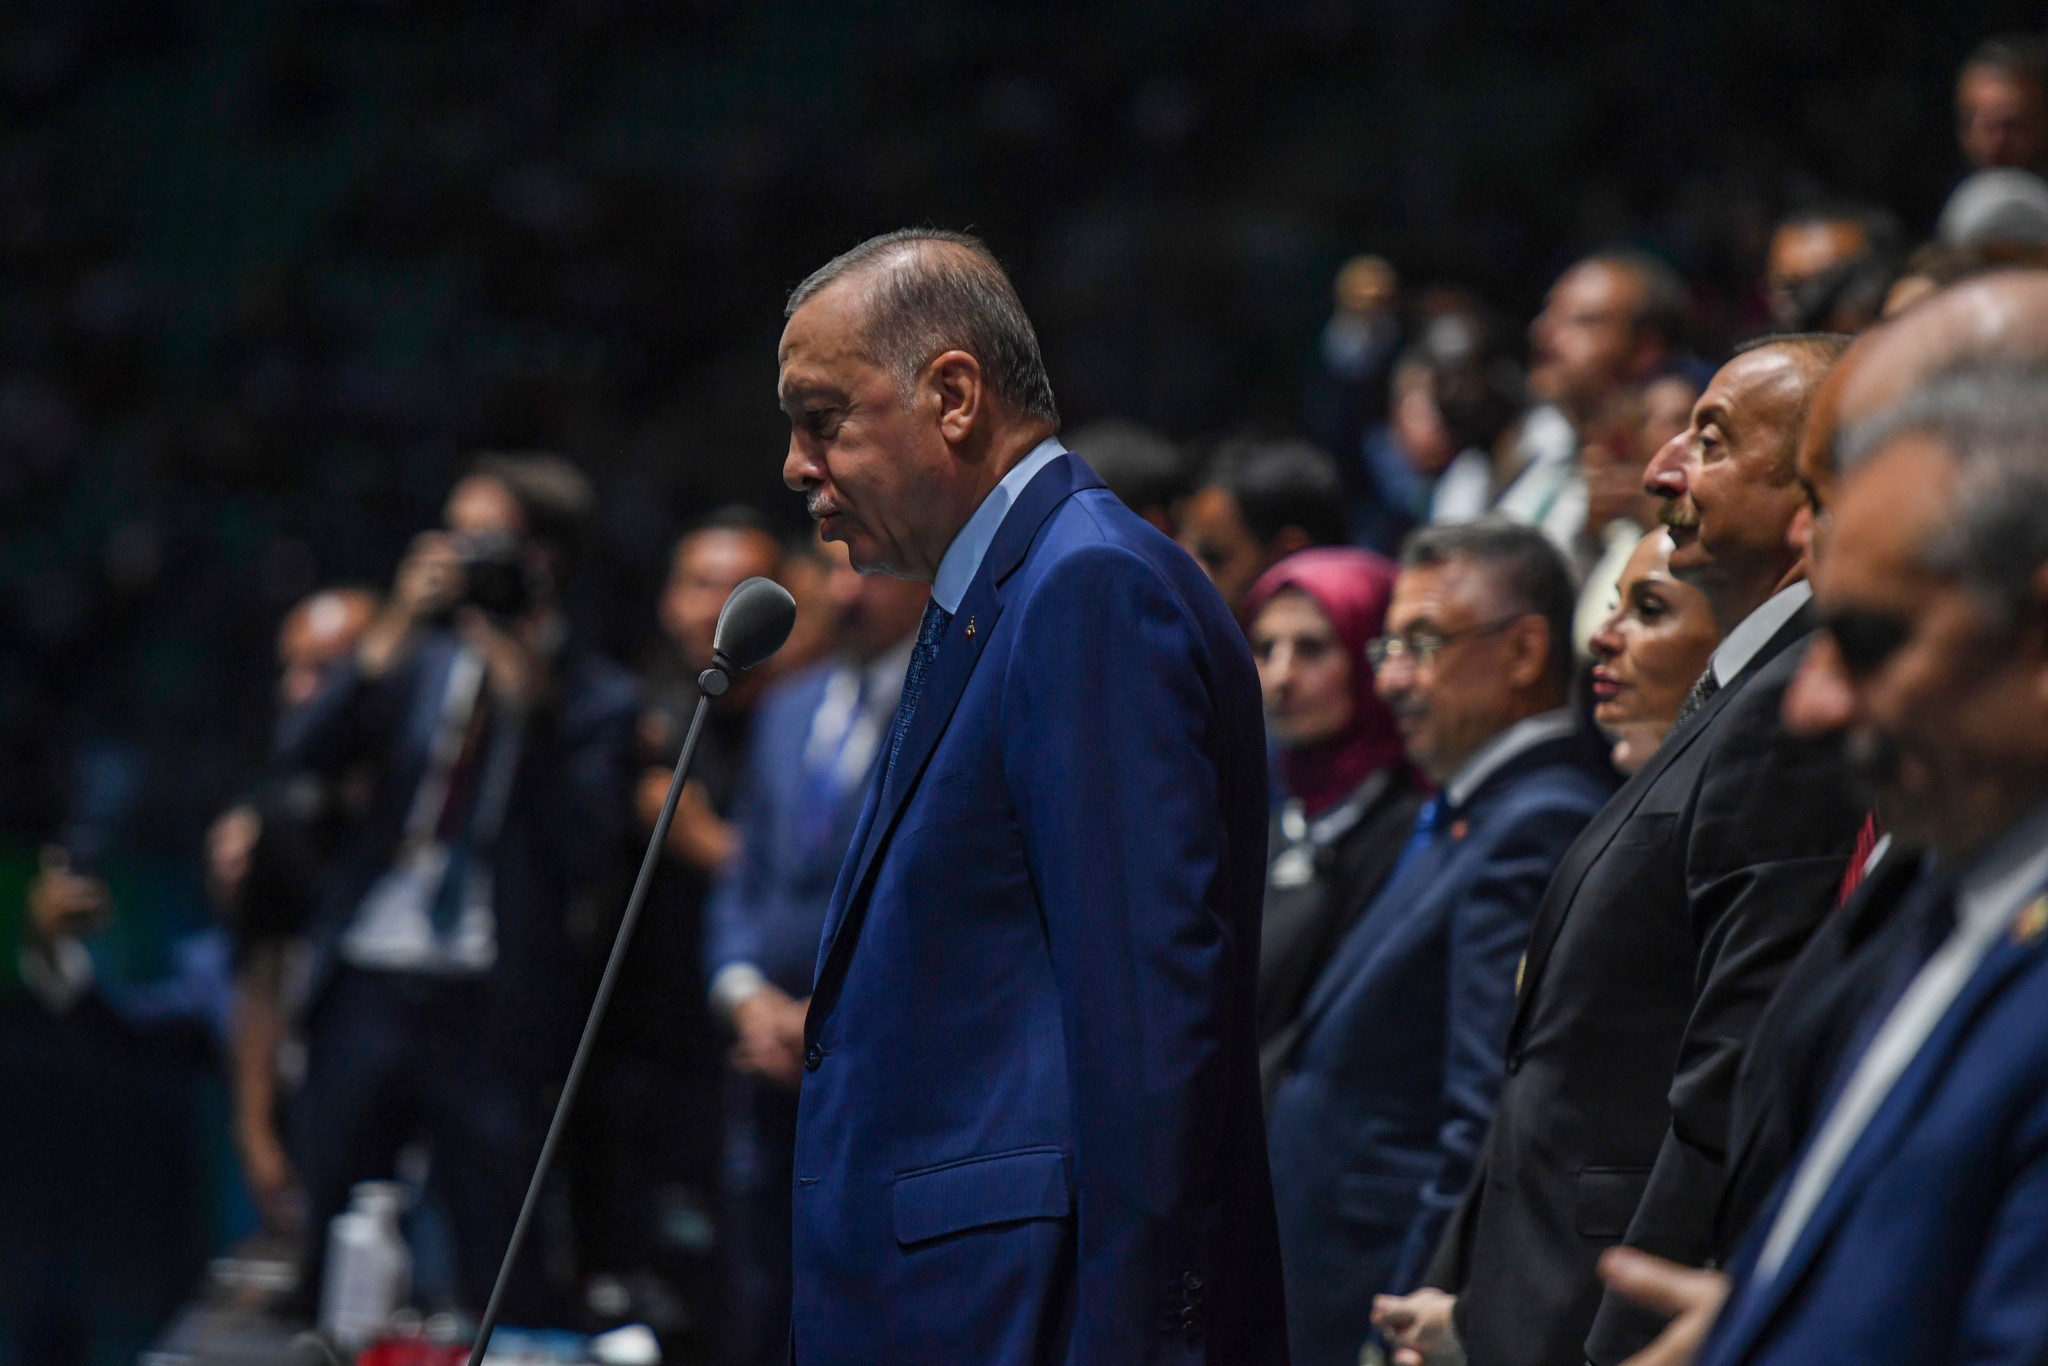 Turkish President Tayyip Erdoğan officially declared the Games open ©Konya 2021